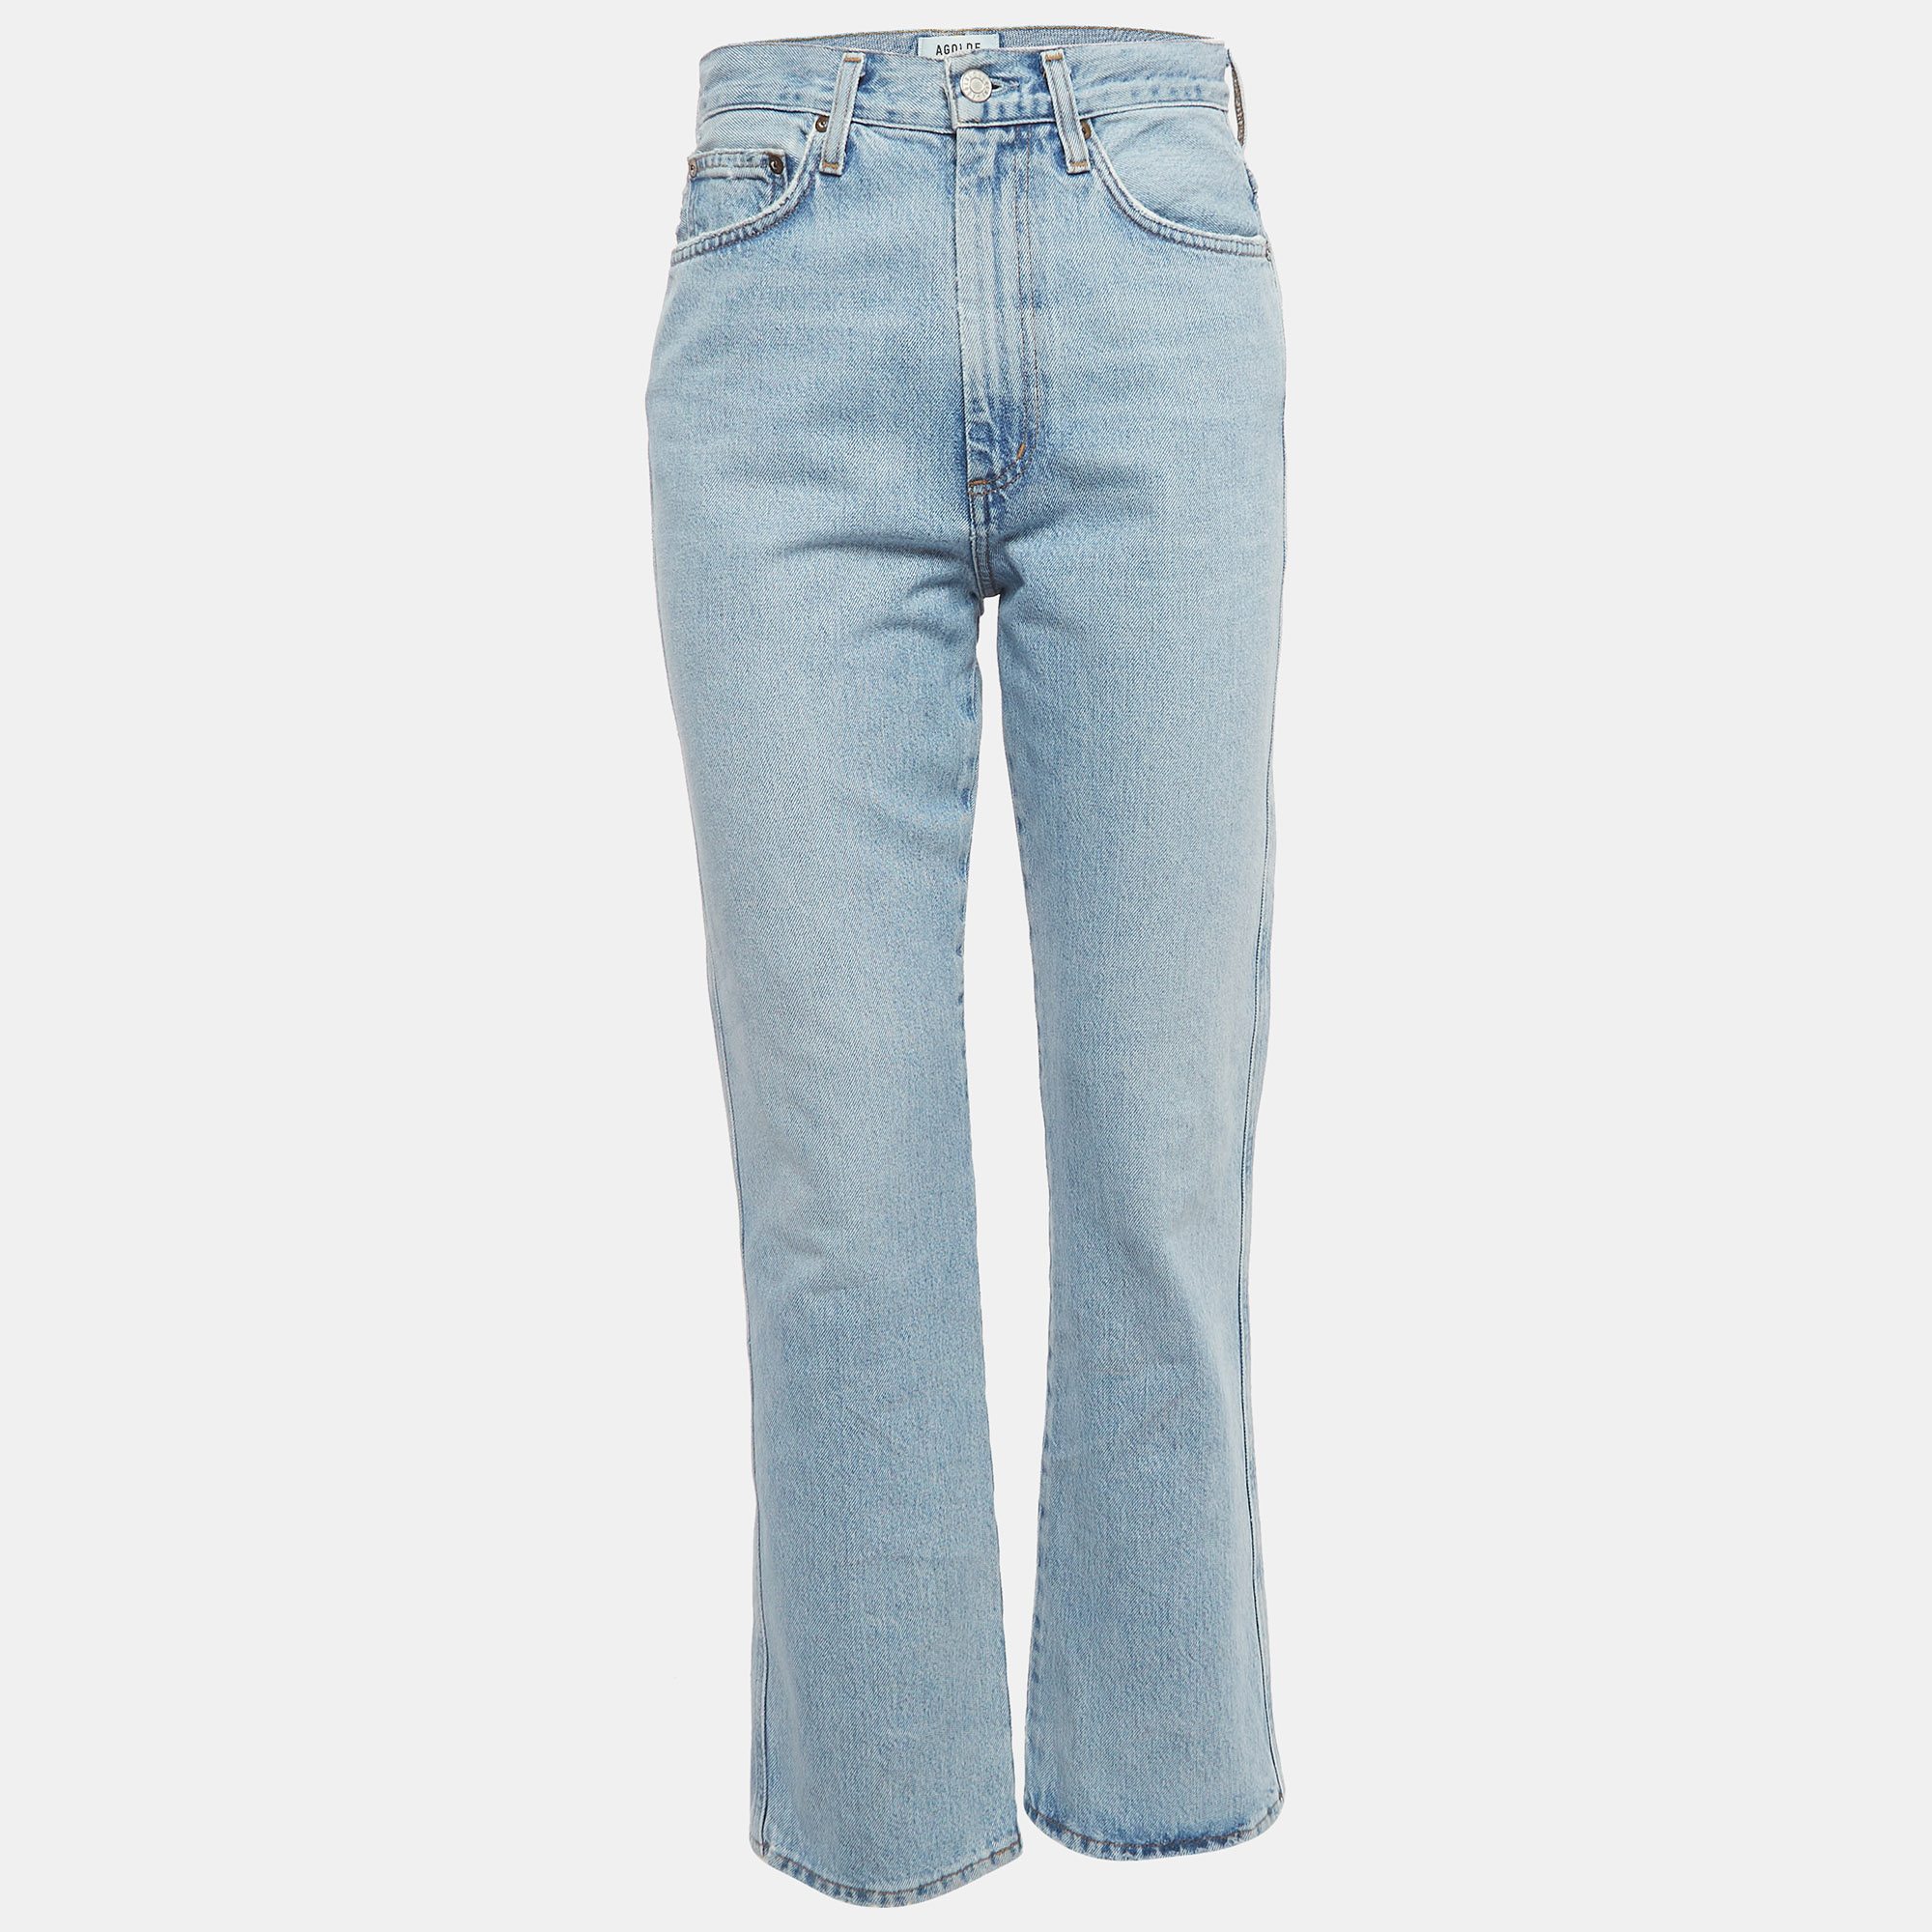 Pre-owned Agolde Blue Distressed Denim High Waist Jeans S Waist 26"